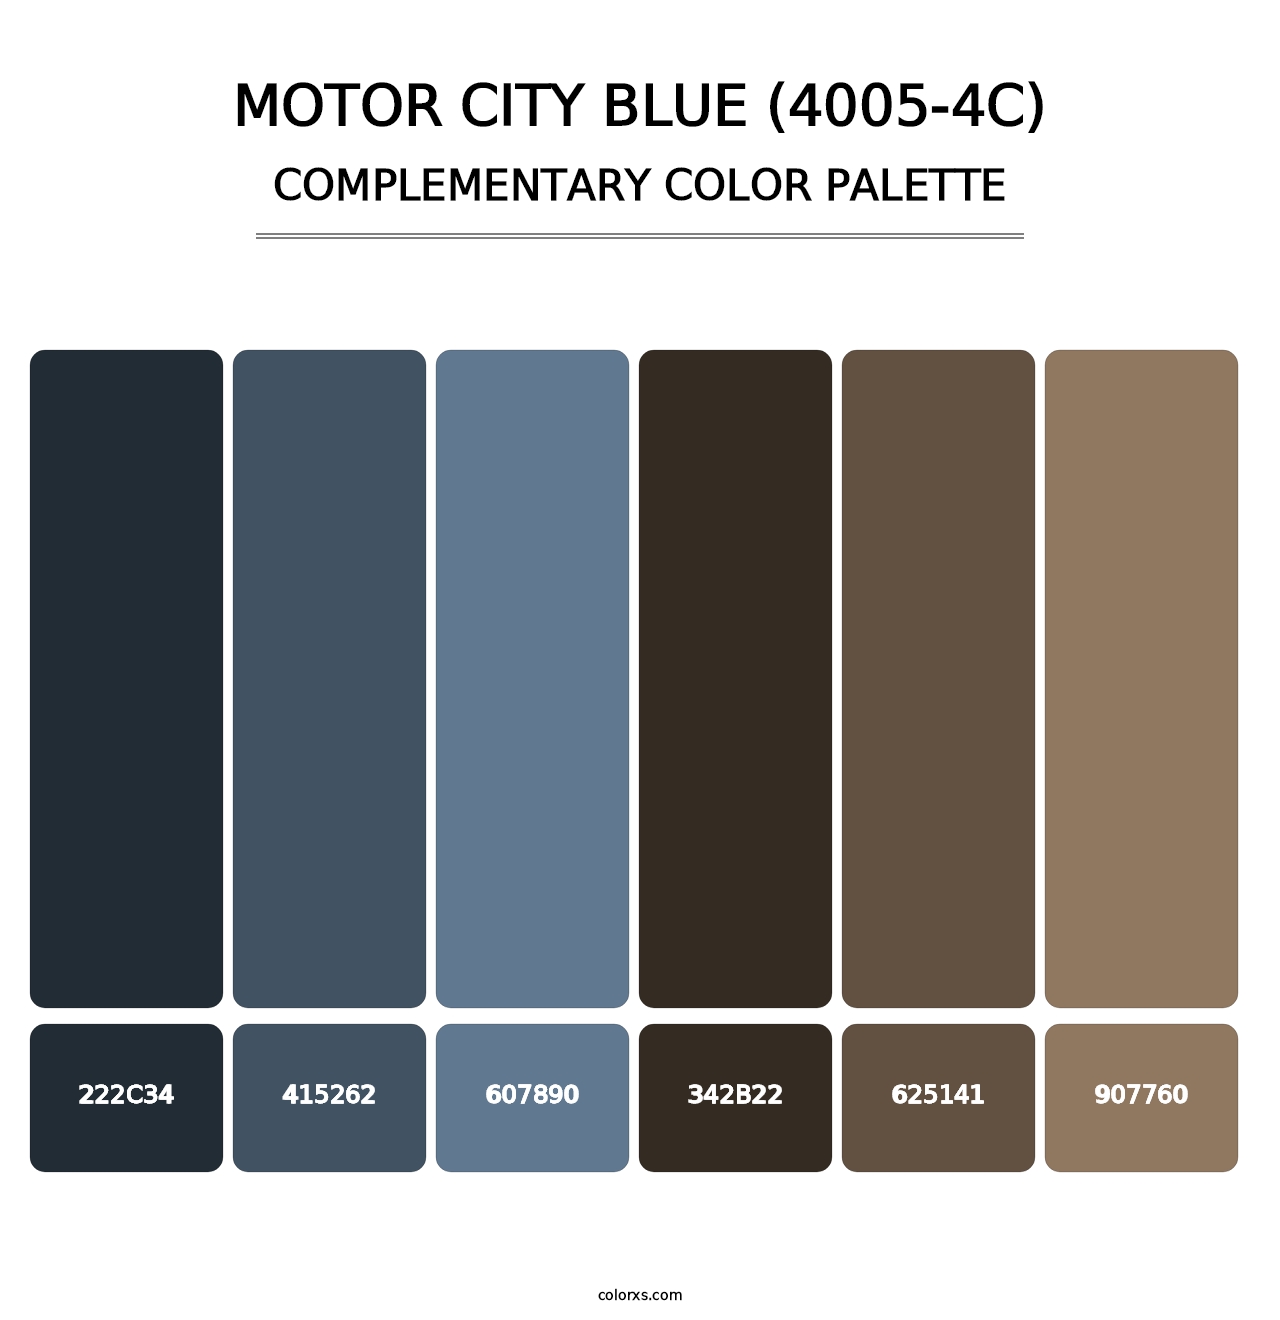 Motor City Blue (4005-4C) - Complementary Color Palette